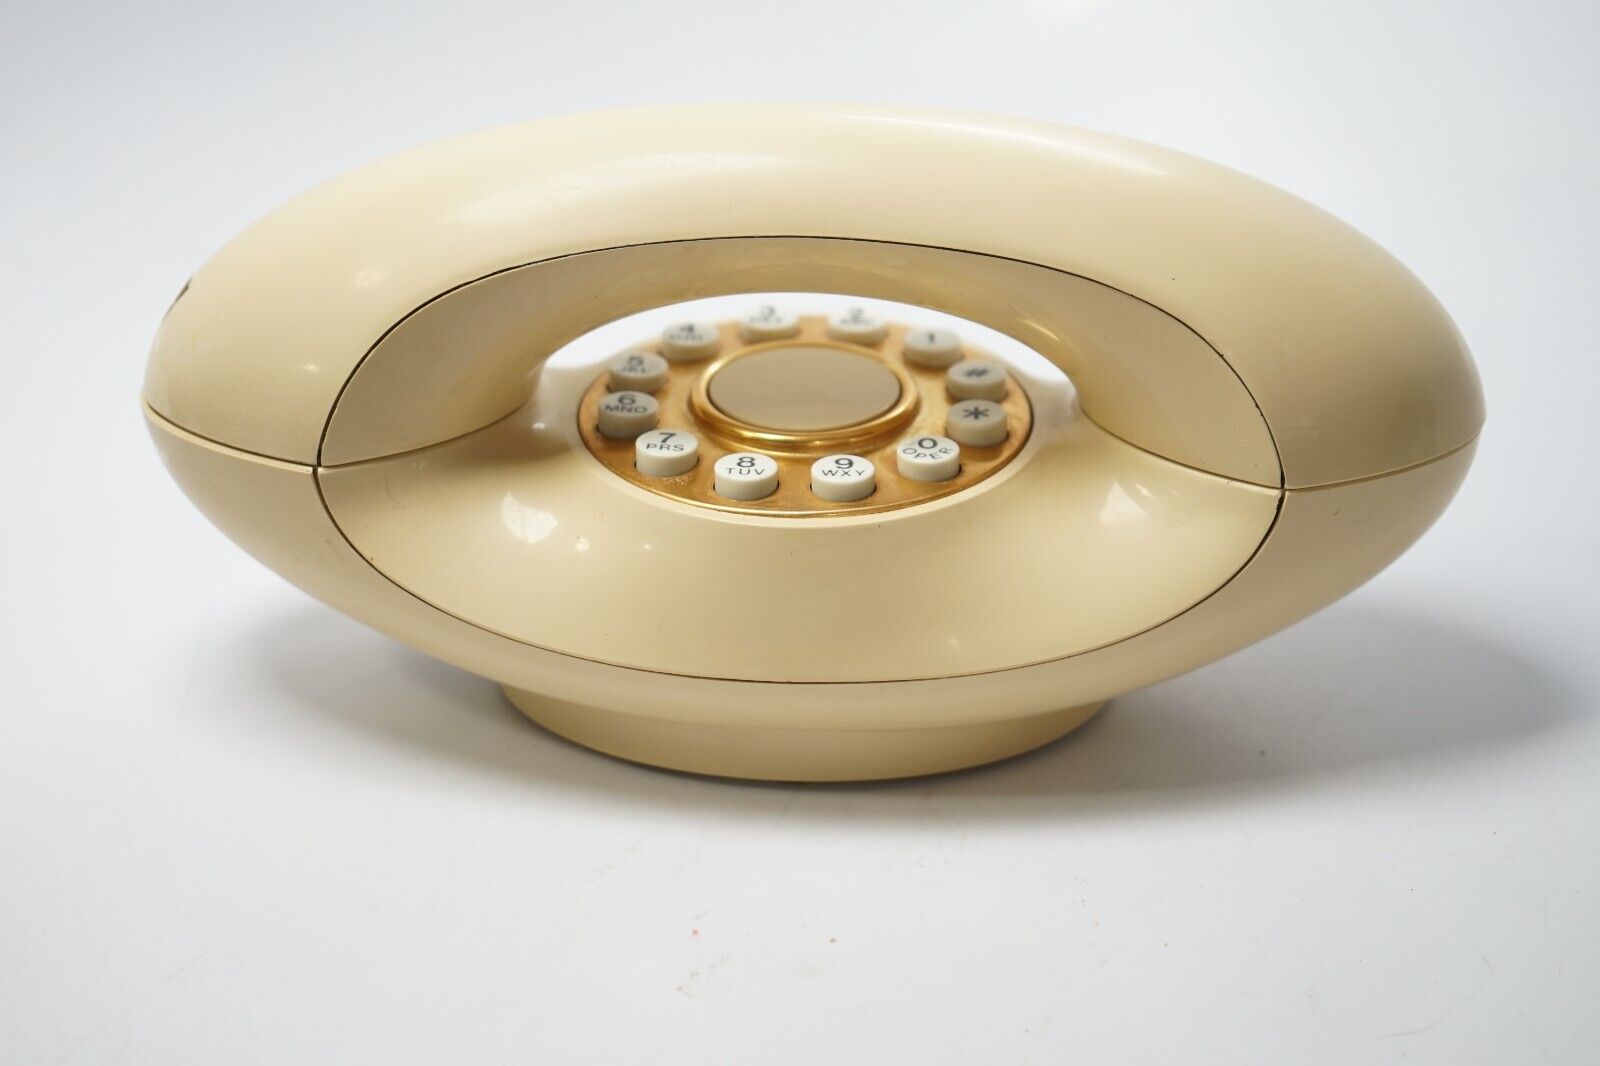 Vintage GENIE PHONE Push Button Telephone ATC TEIF 8300 Cream Beige Oval 1970s